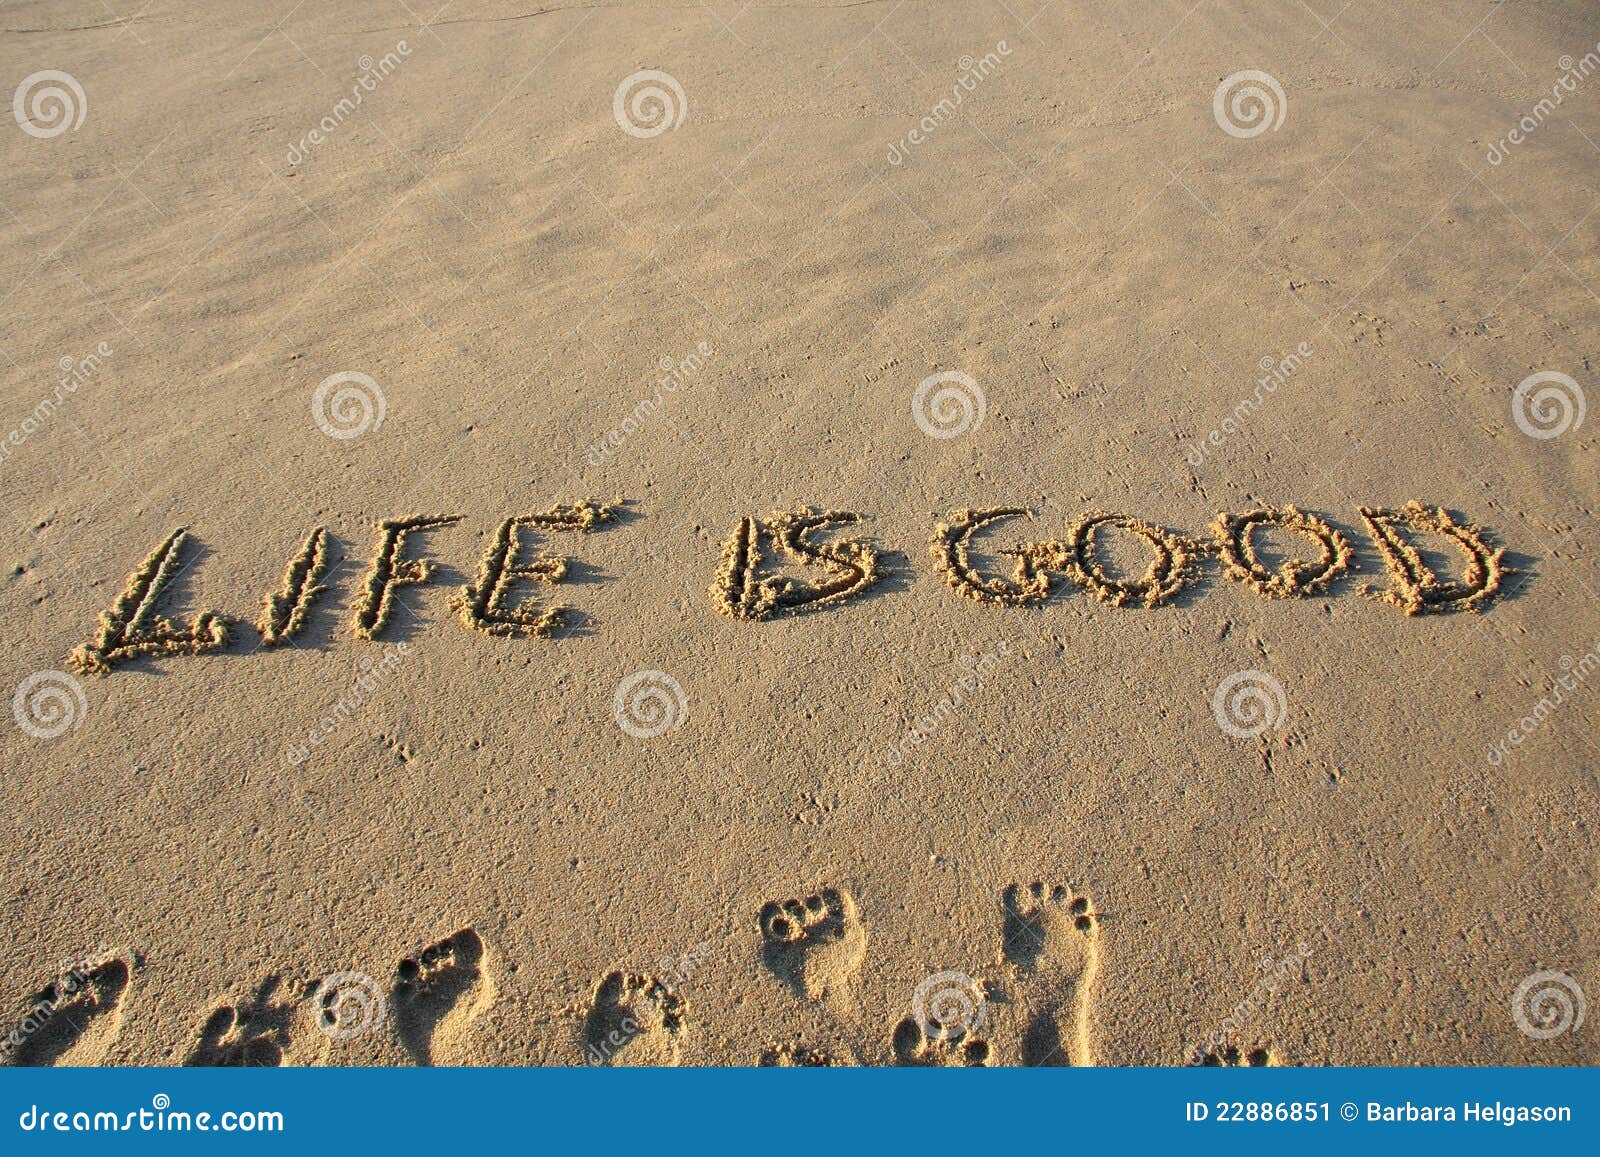 life-good-22886851.jpg